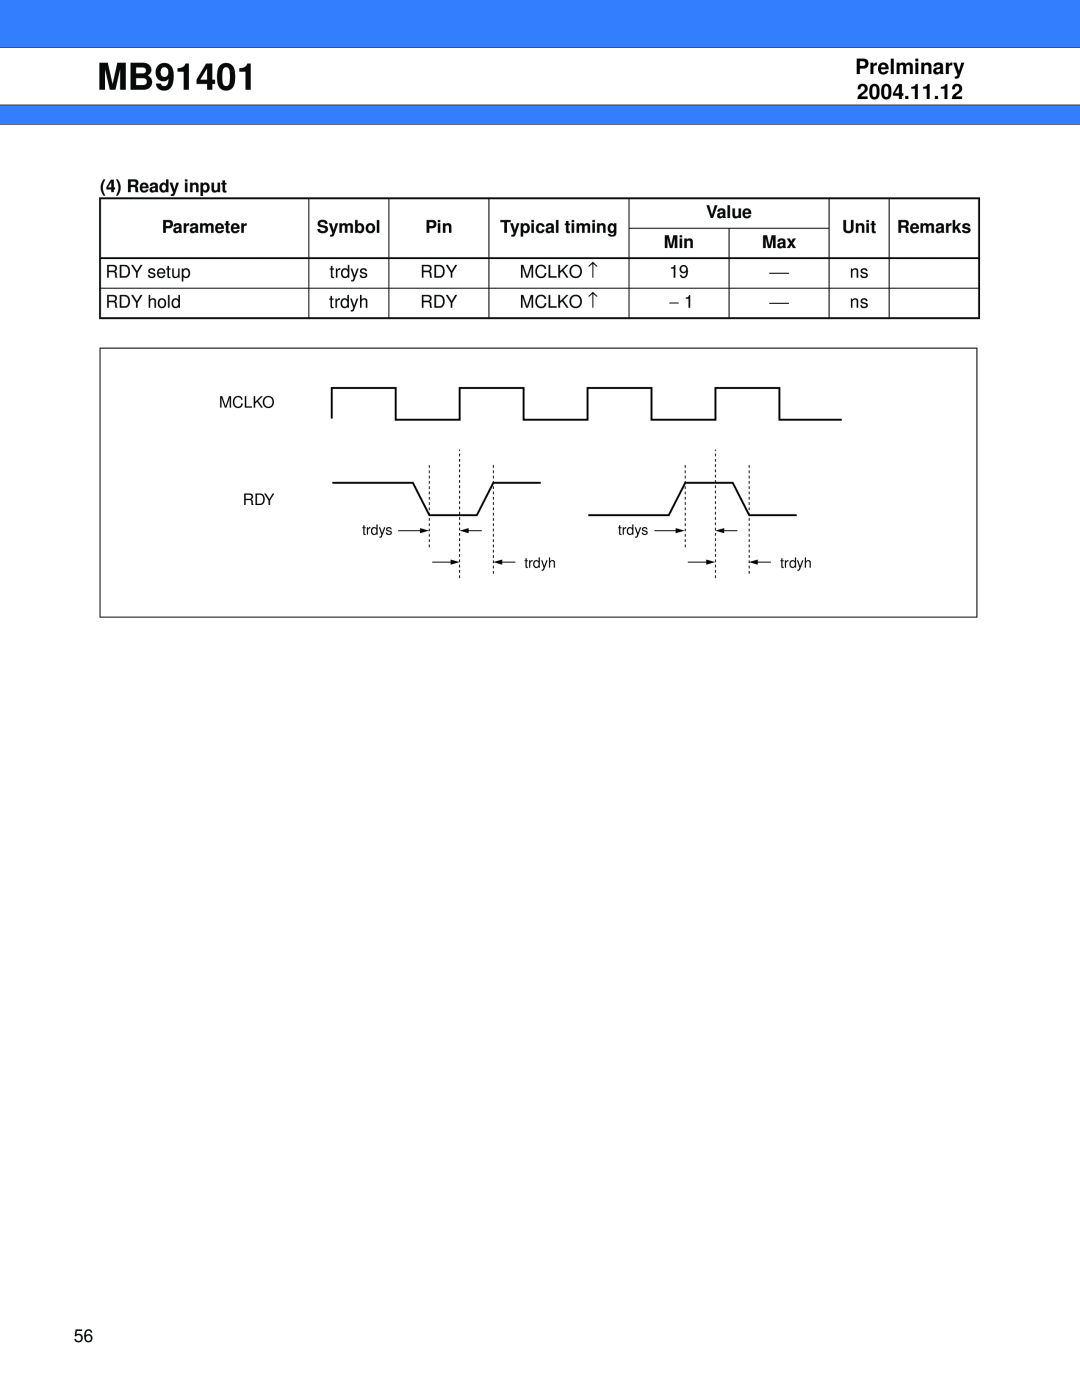 Fujitsu MB91401 manual Ready input, Prelminary, 2004.11.12, Parameter, Symbol, Typical timing, Value, Unit, Remarks 